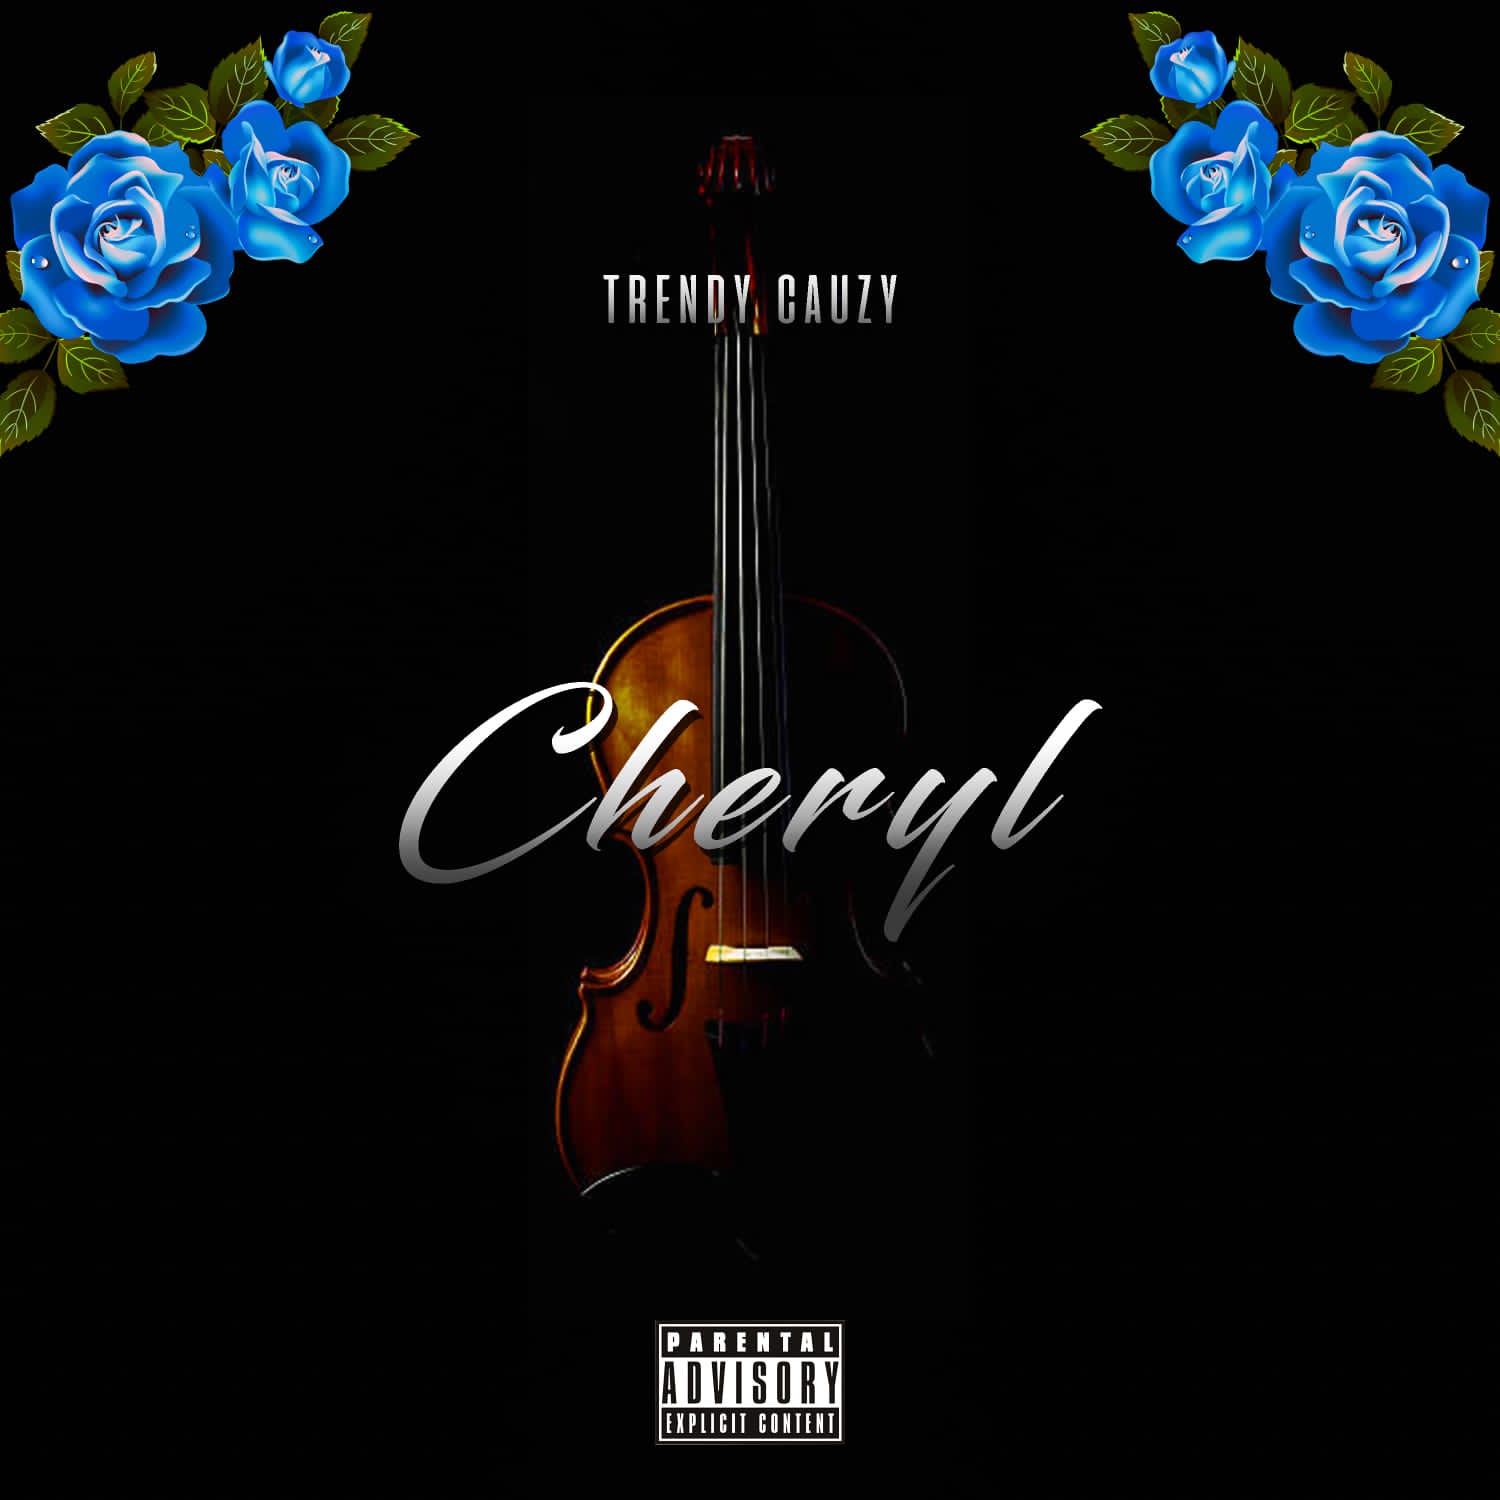 Cheryl" the Italian song of "Trendy cauzy